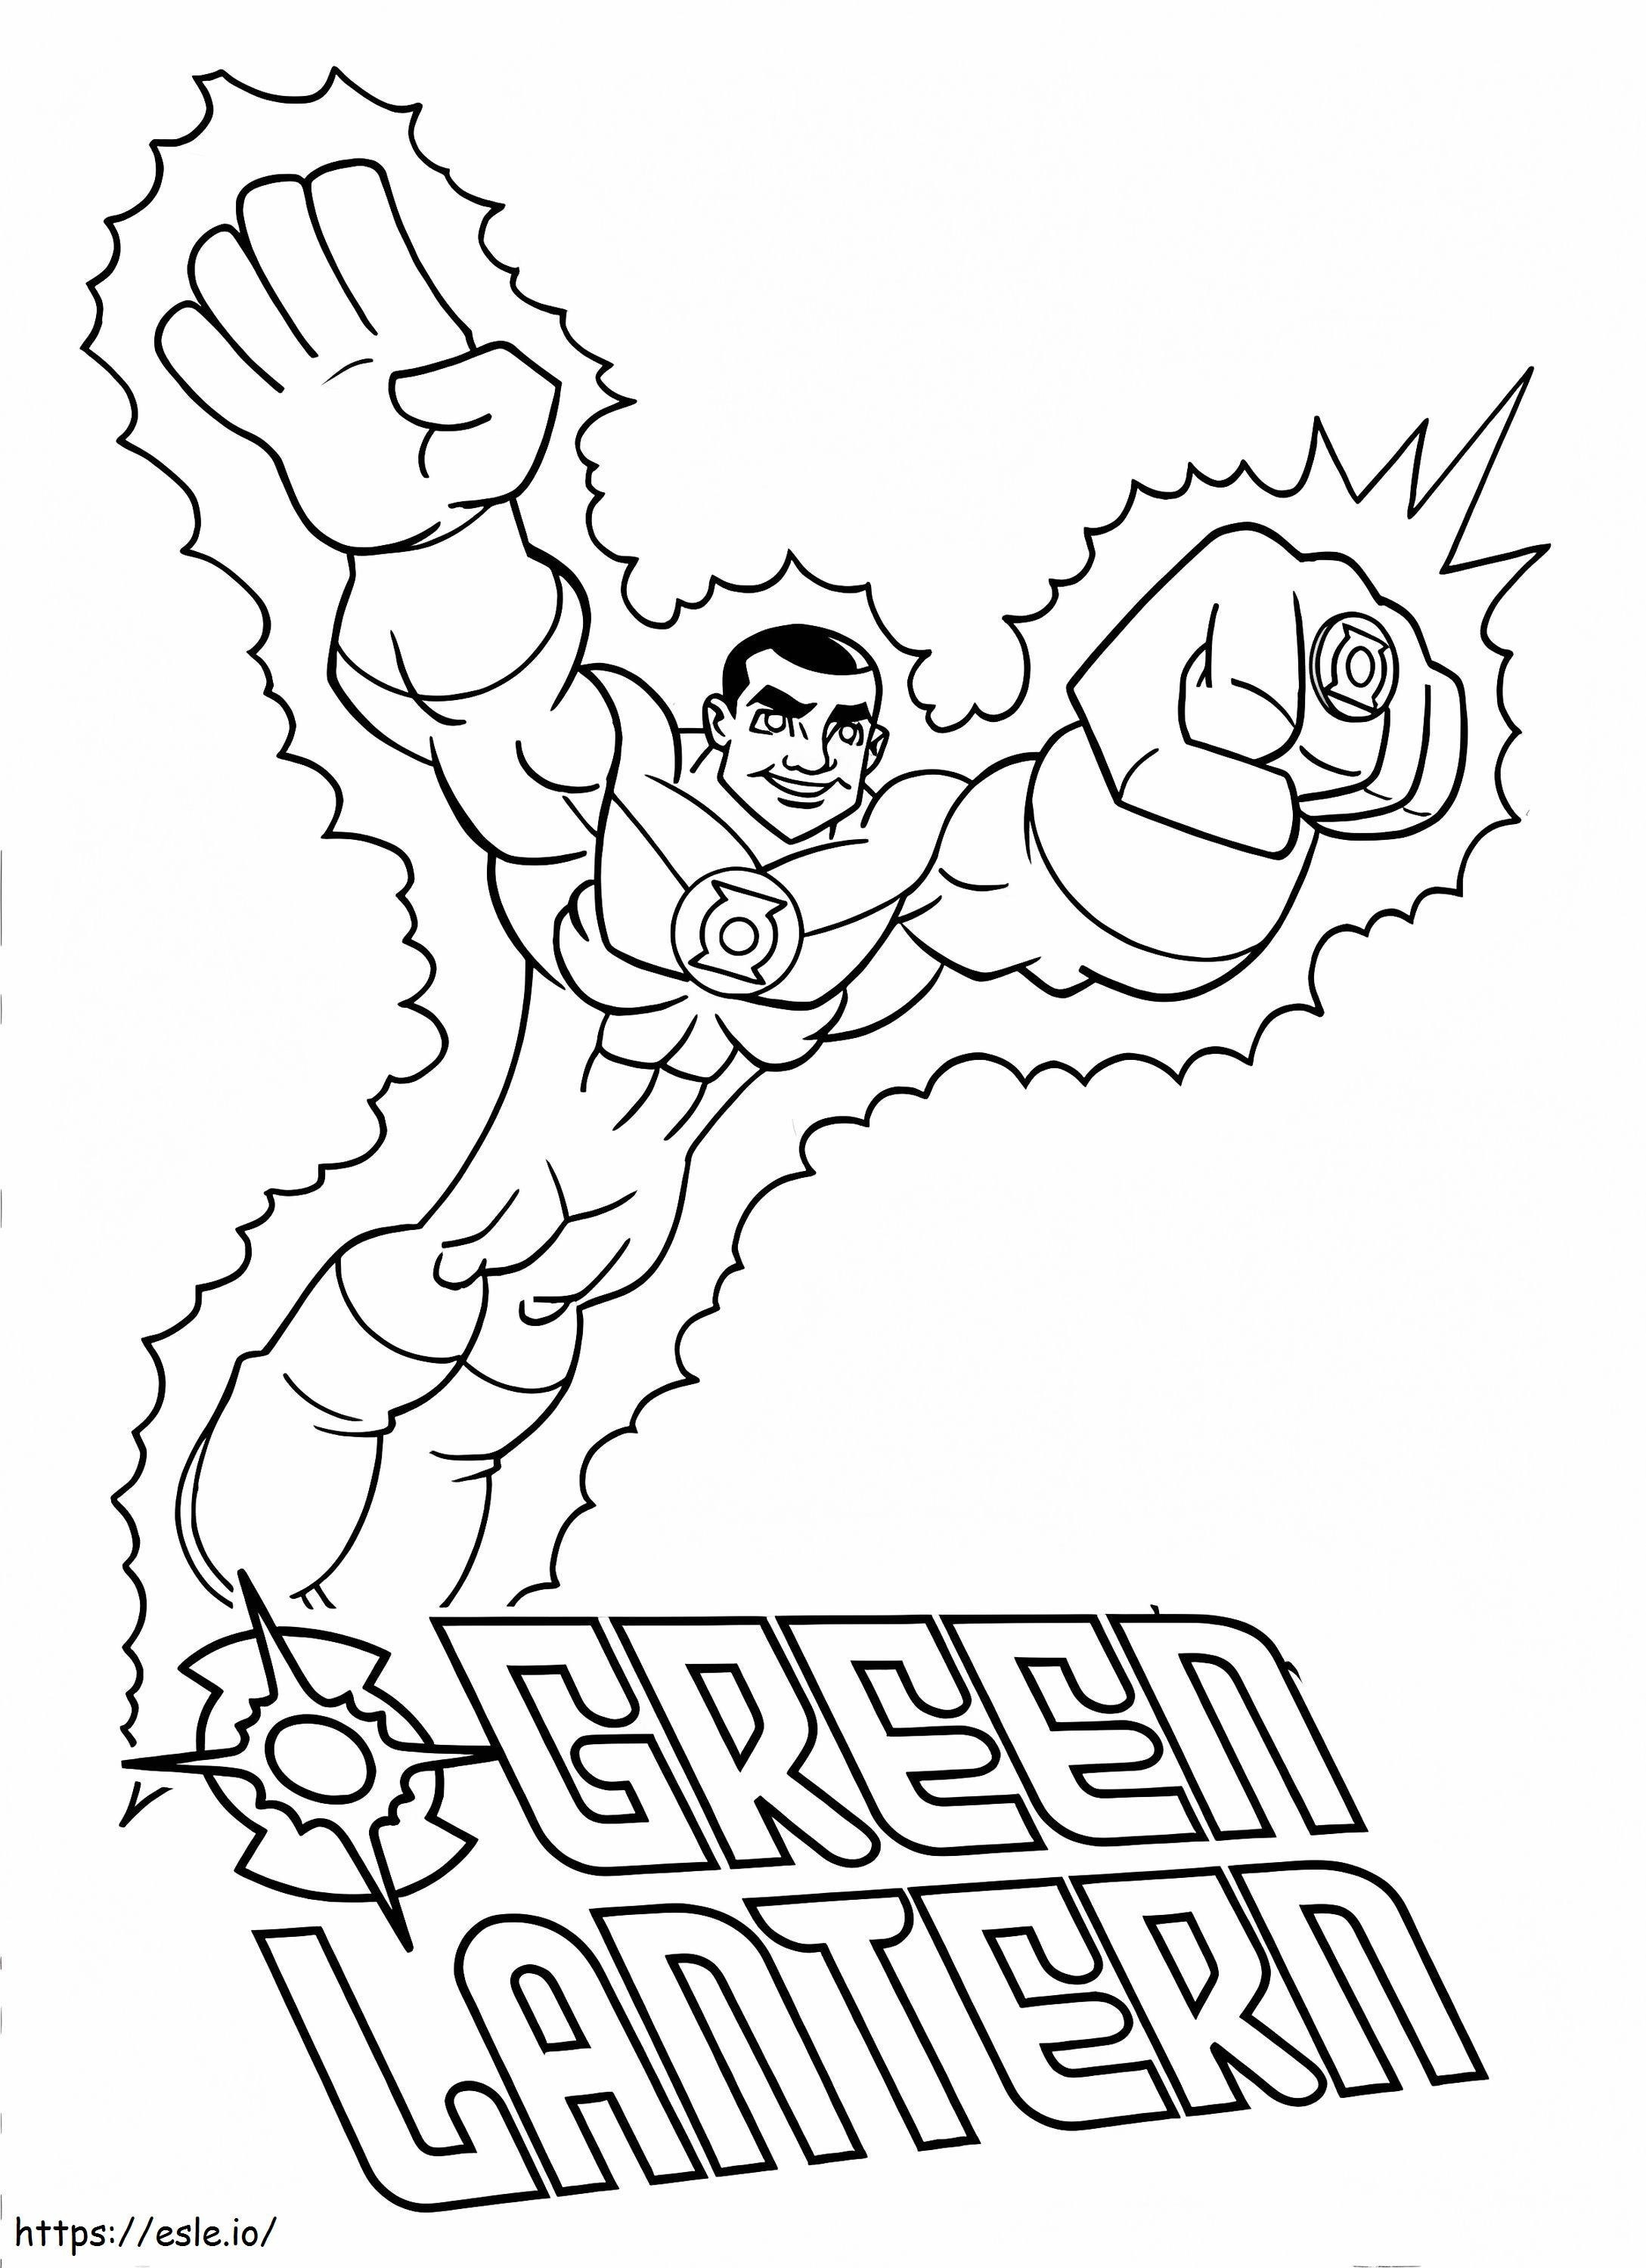 Green Lantern 12 coloring page